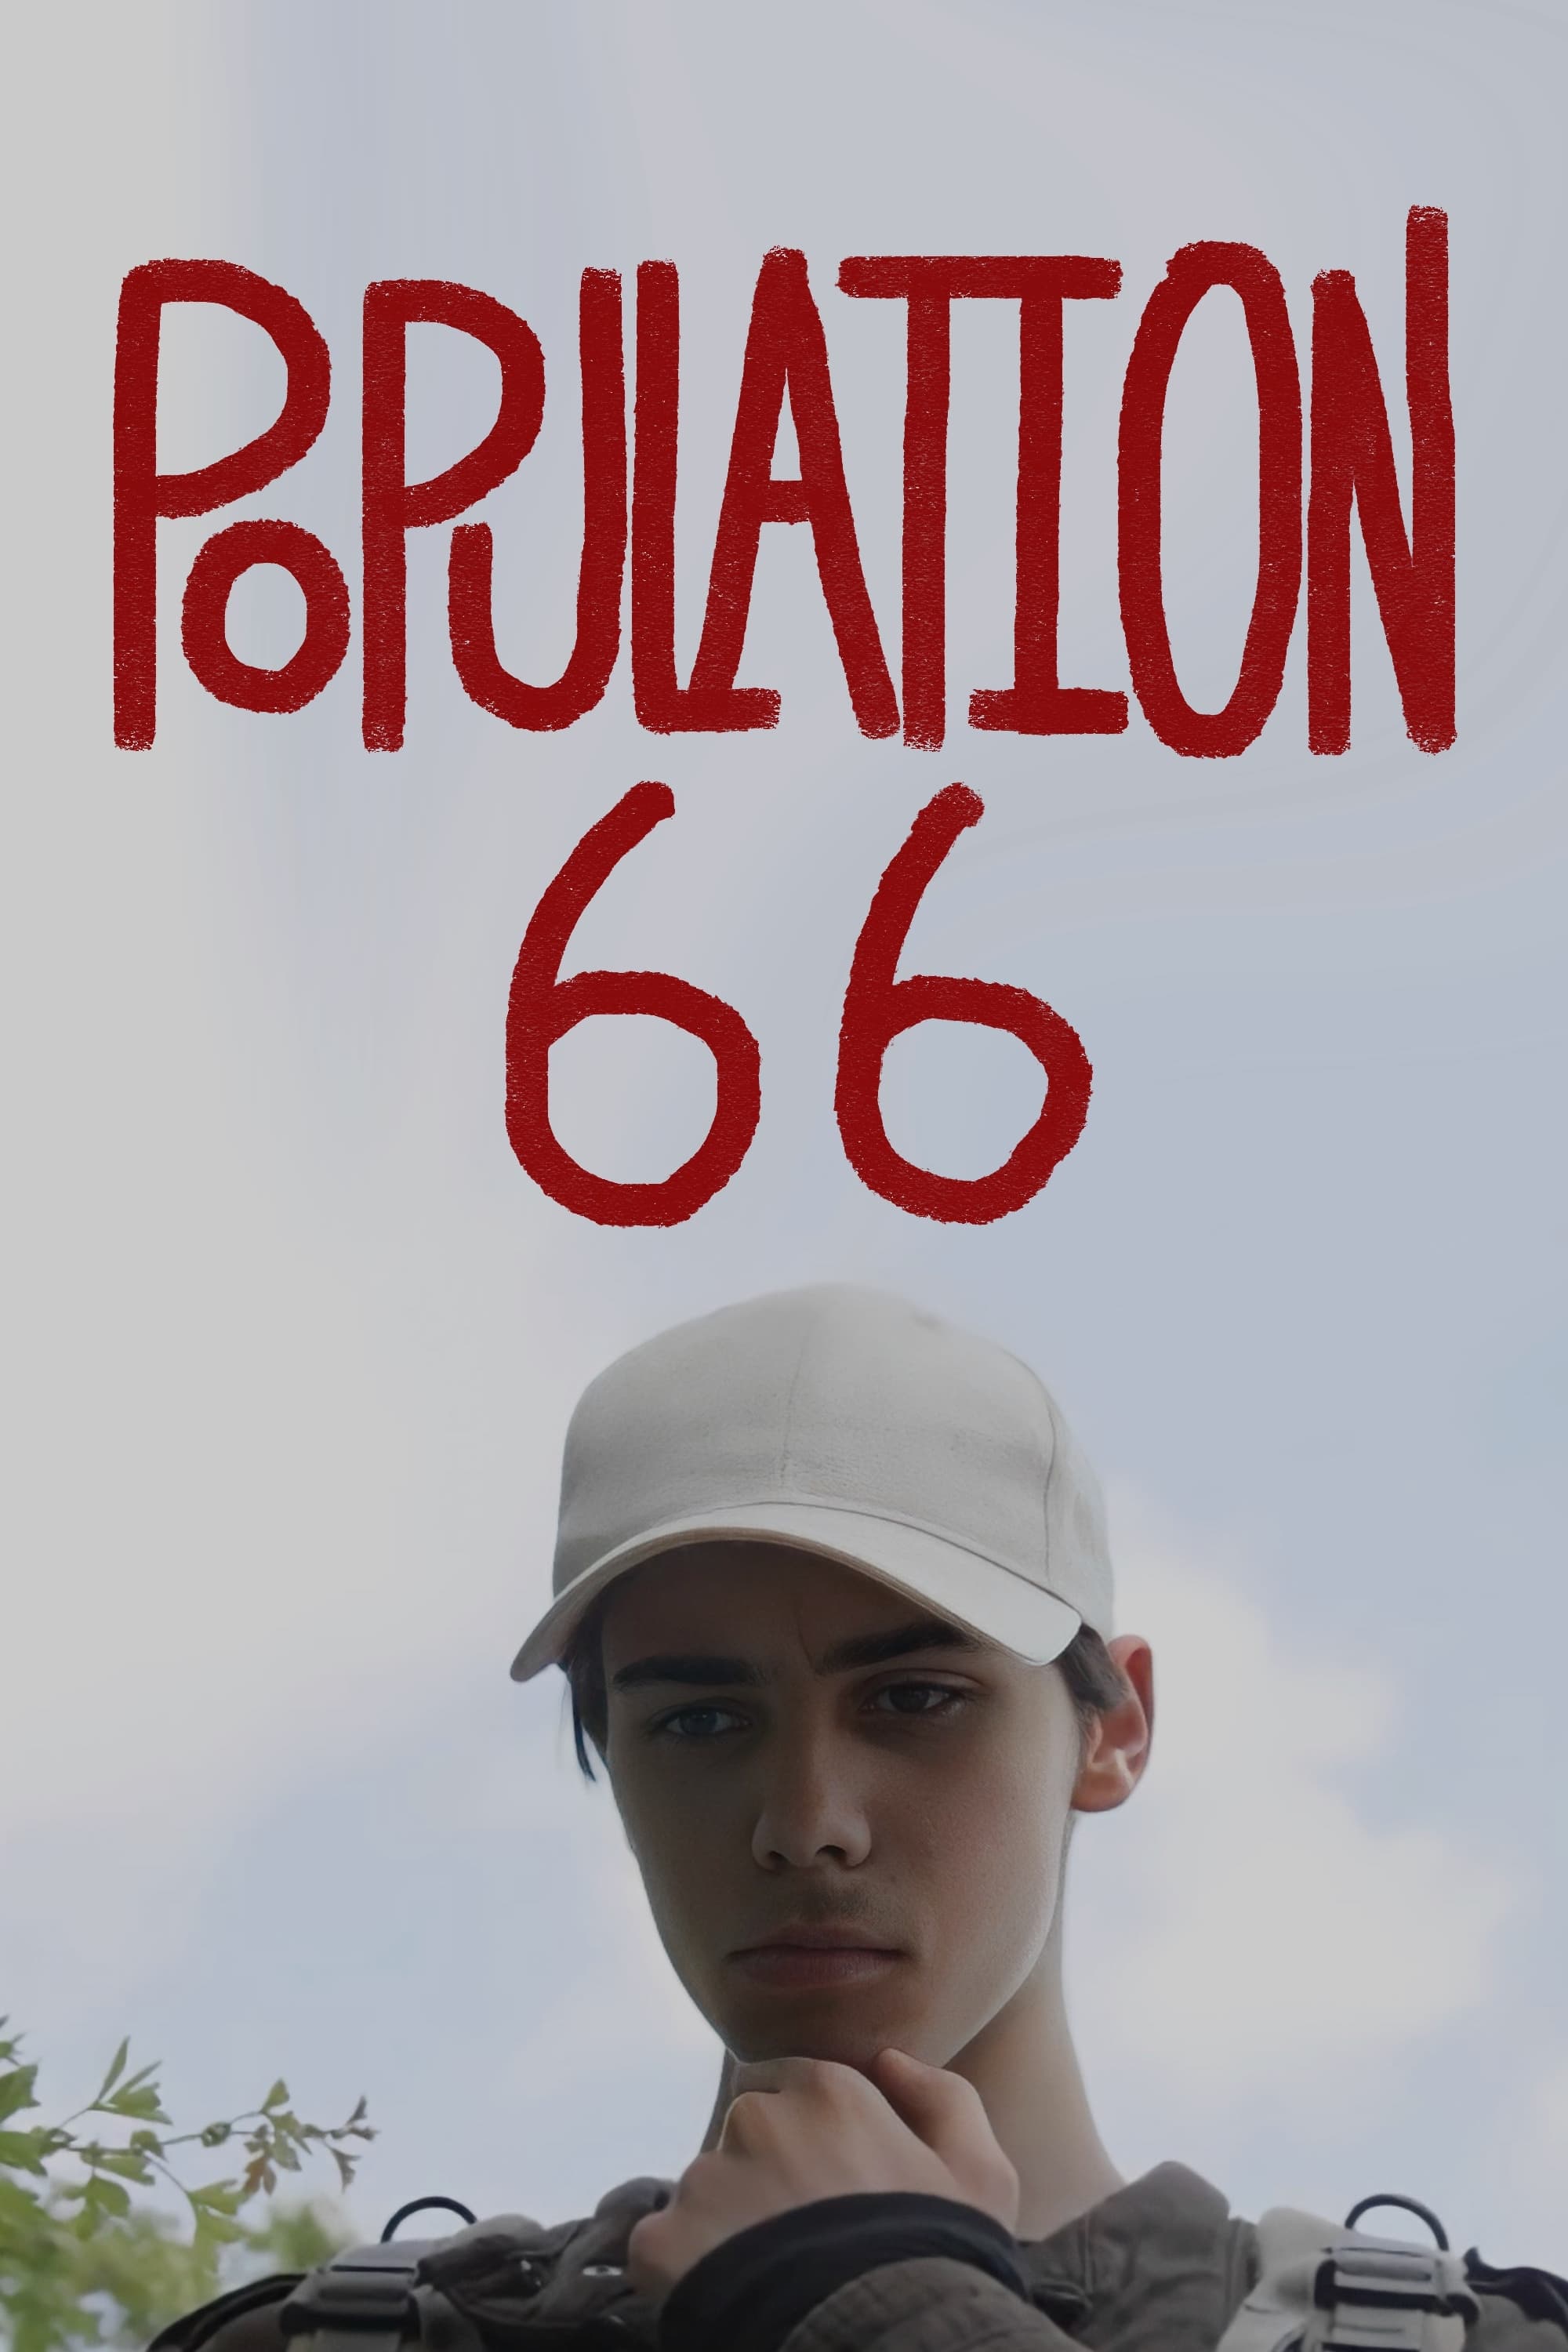 Population 66